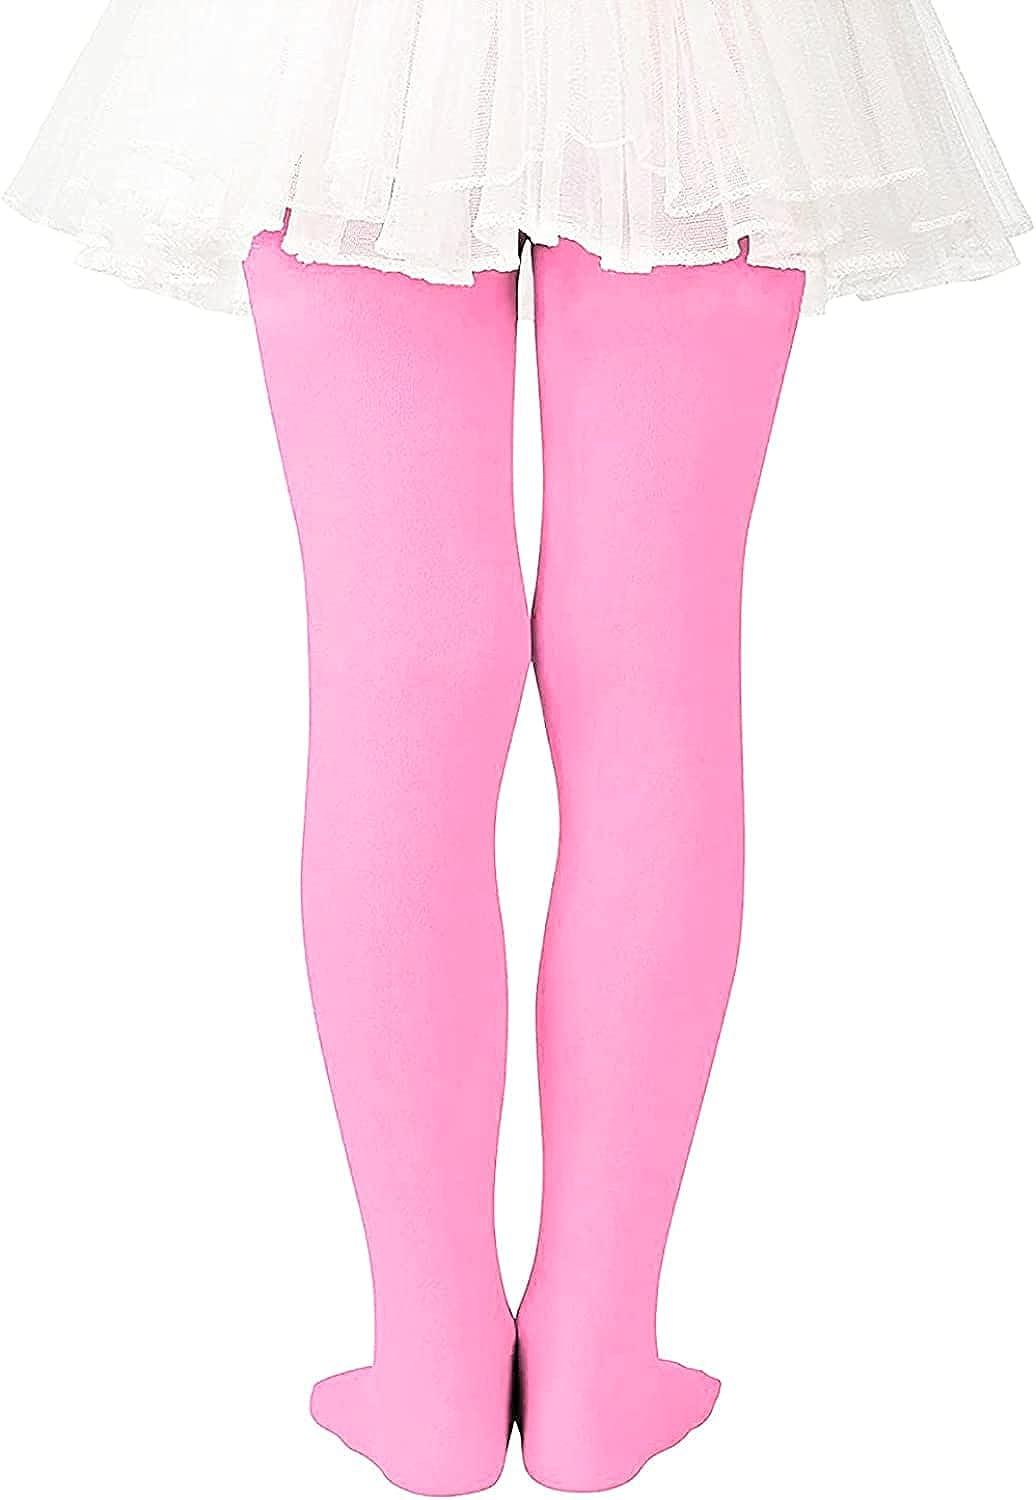  Stretchy Pink Ballet Tights For Girls 6-8 Ultra Soft Dance  Tights For Girls 7-8 Colorful Girls Tights Size 6-7 Girls Leggings Size 8  Kid Stockings Nylon Spandex